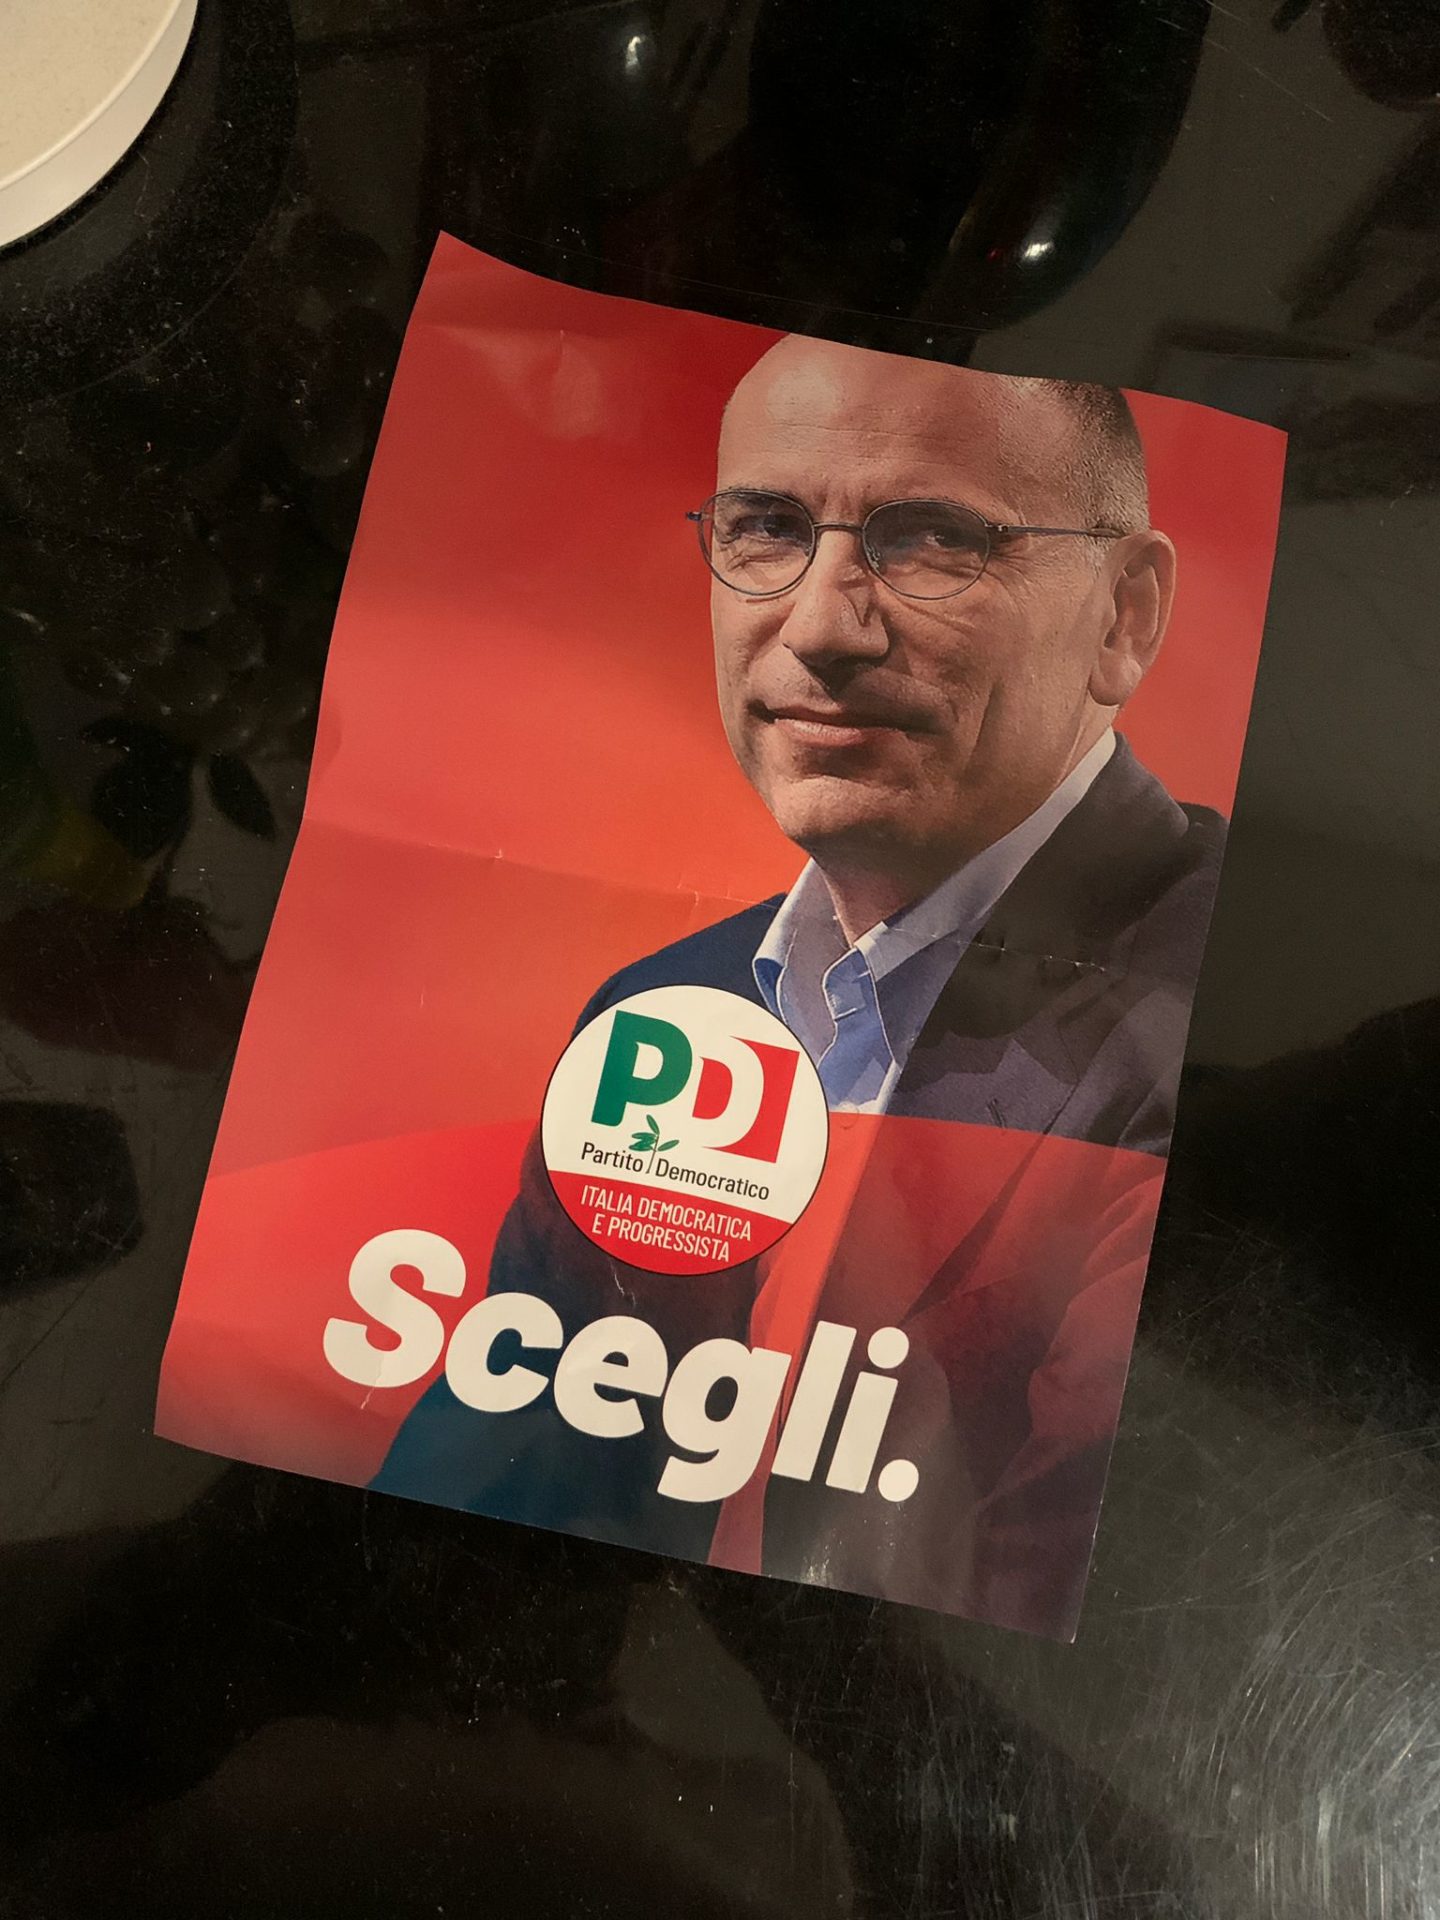 Wahlkampf in Venedig - Parlamentswahl 2022